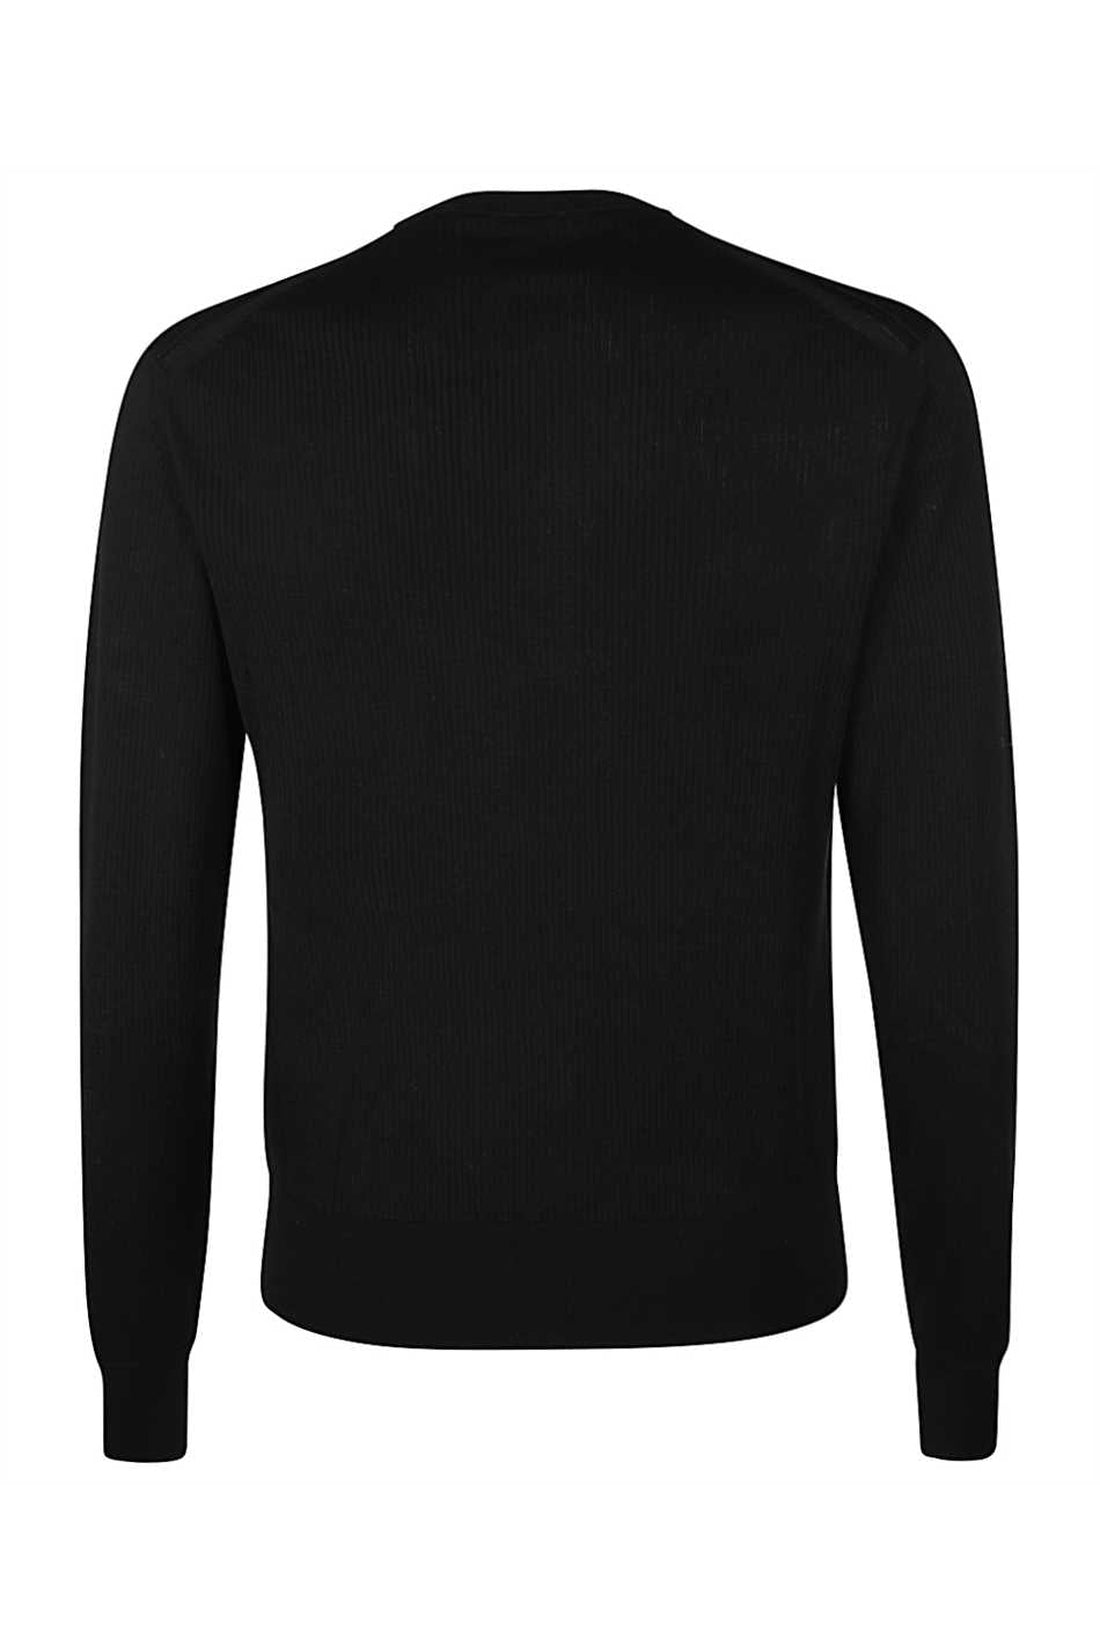 Tom Ford-OUTLET-SALE-Cotton-silk blend crew-neck sweater-ARCHIVIST